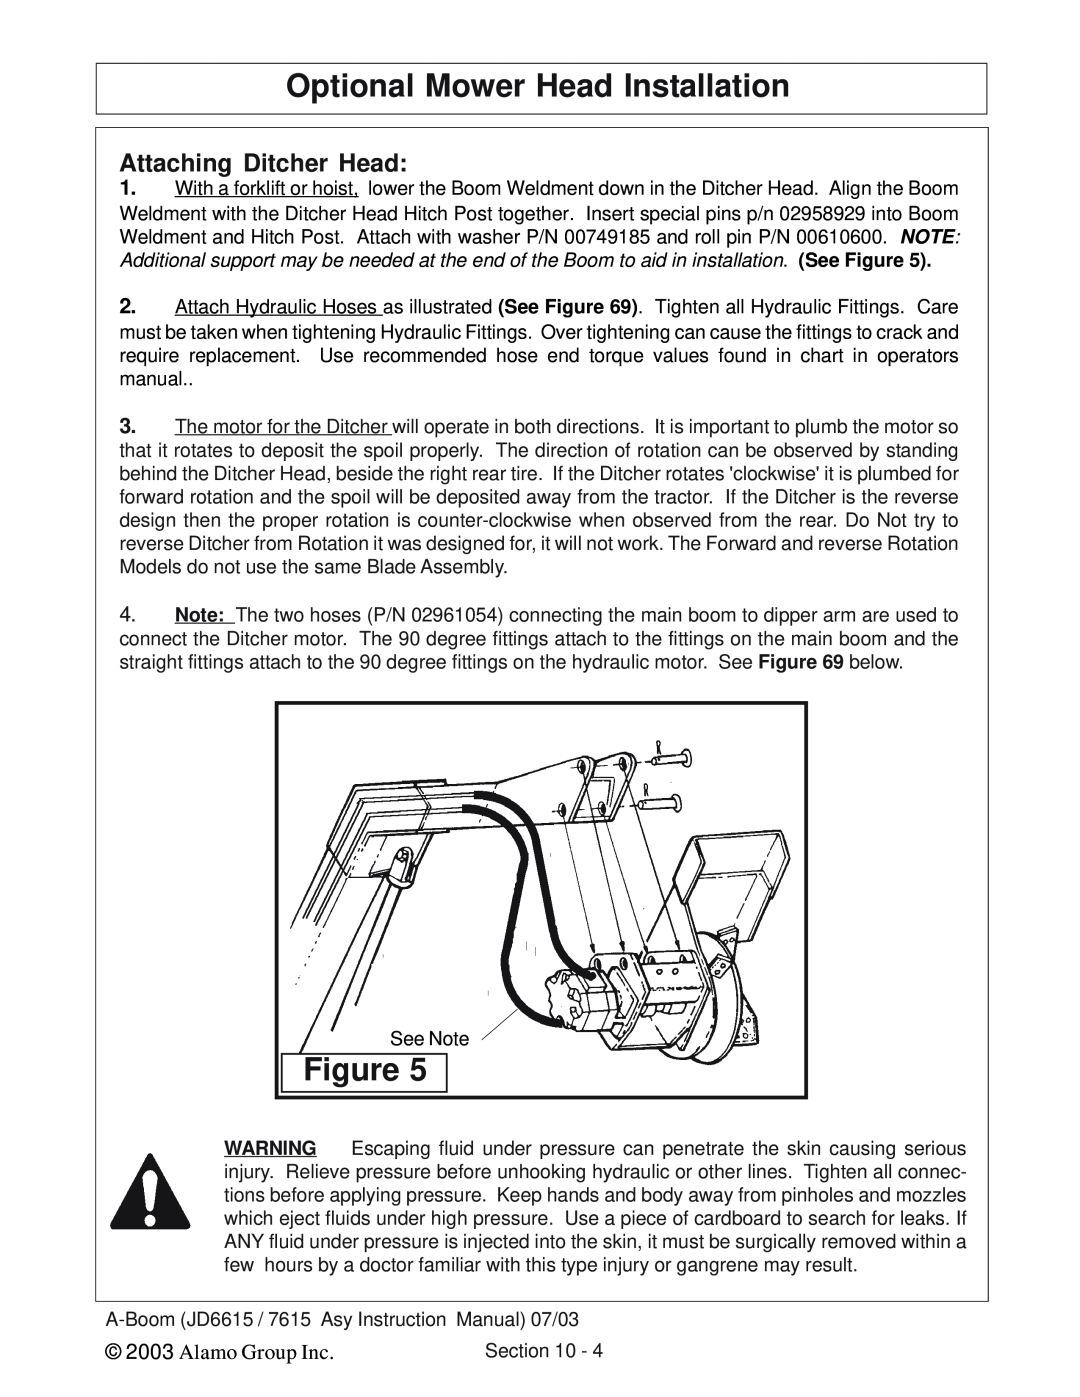 Alamo DSEB-D16/SAS instruction manual Attaching Ditcher Head, Optional Mower Head Installation, Alamo Group Inc 